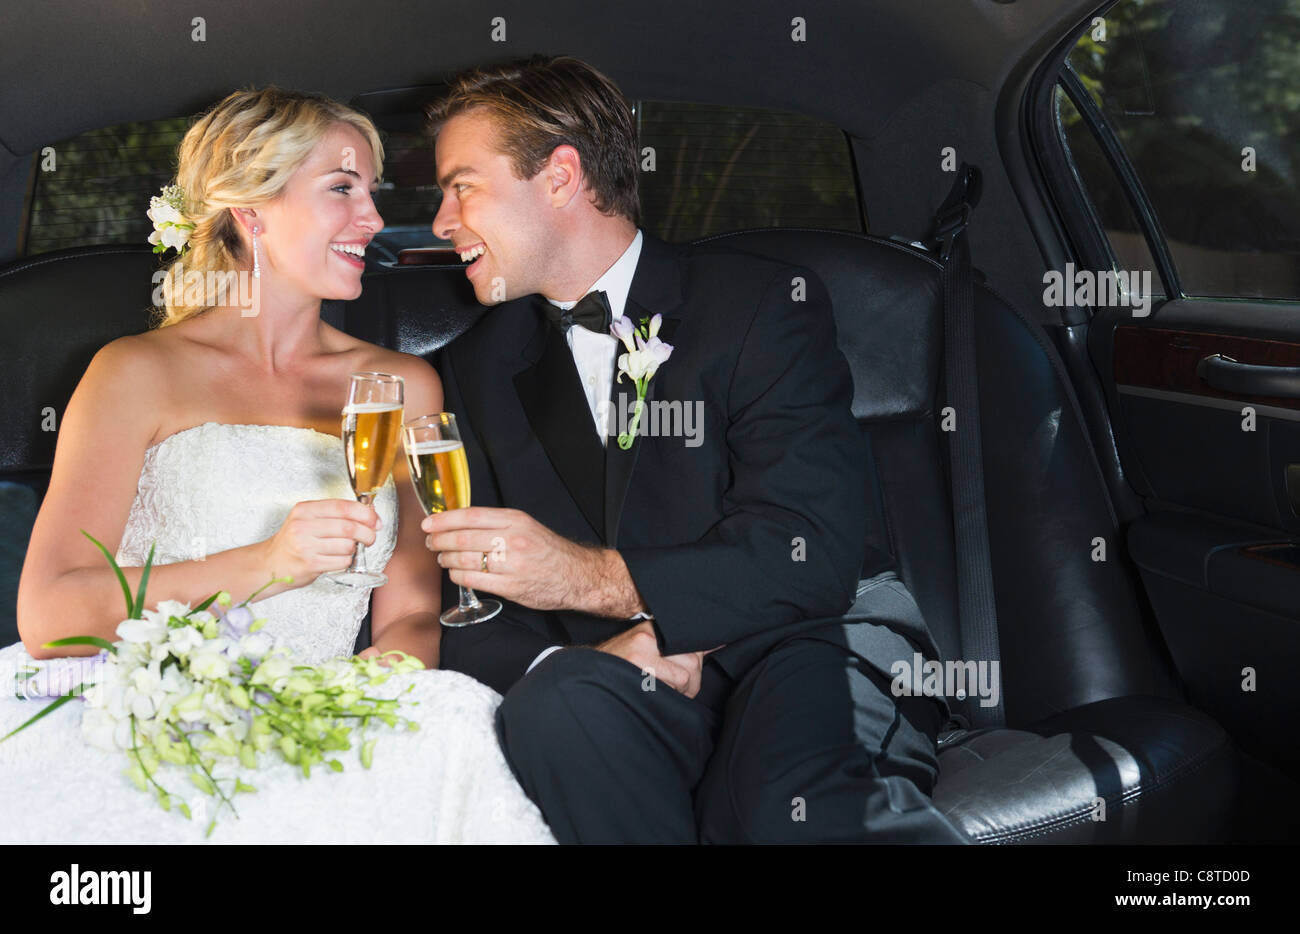 USA, New York State, Old Westbury, verheiratetes Paar in limousine Stockfoto